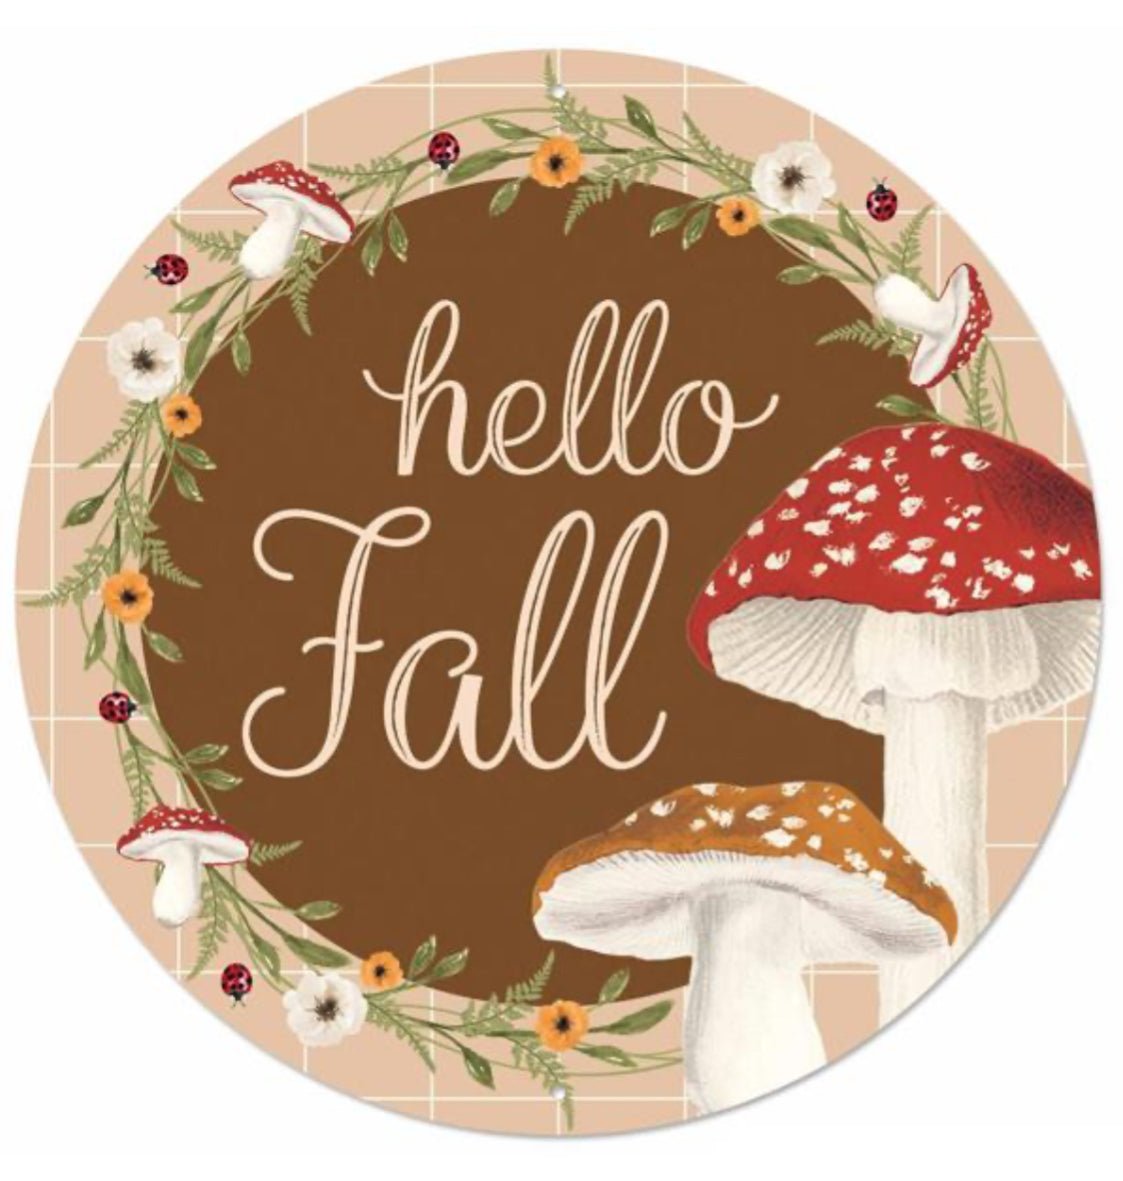 Mixed Mushrooms fall round metal sign 12” - Greenery MarketSeasonal & Holiday DecorationsMD1177